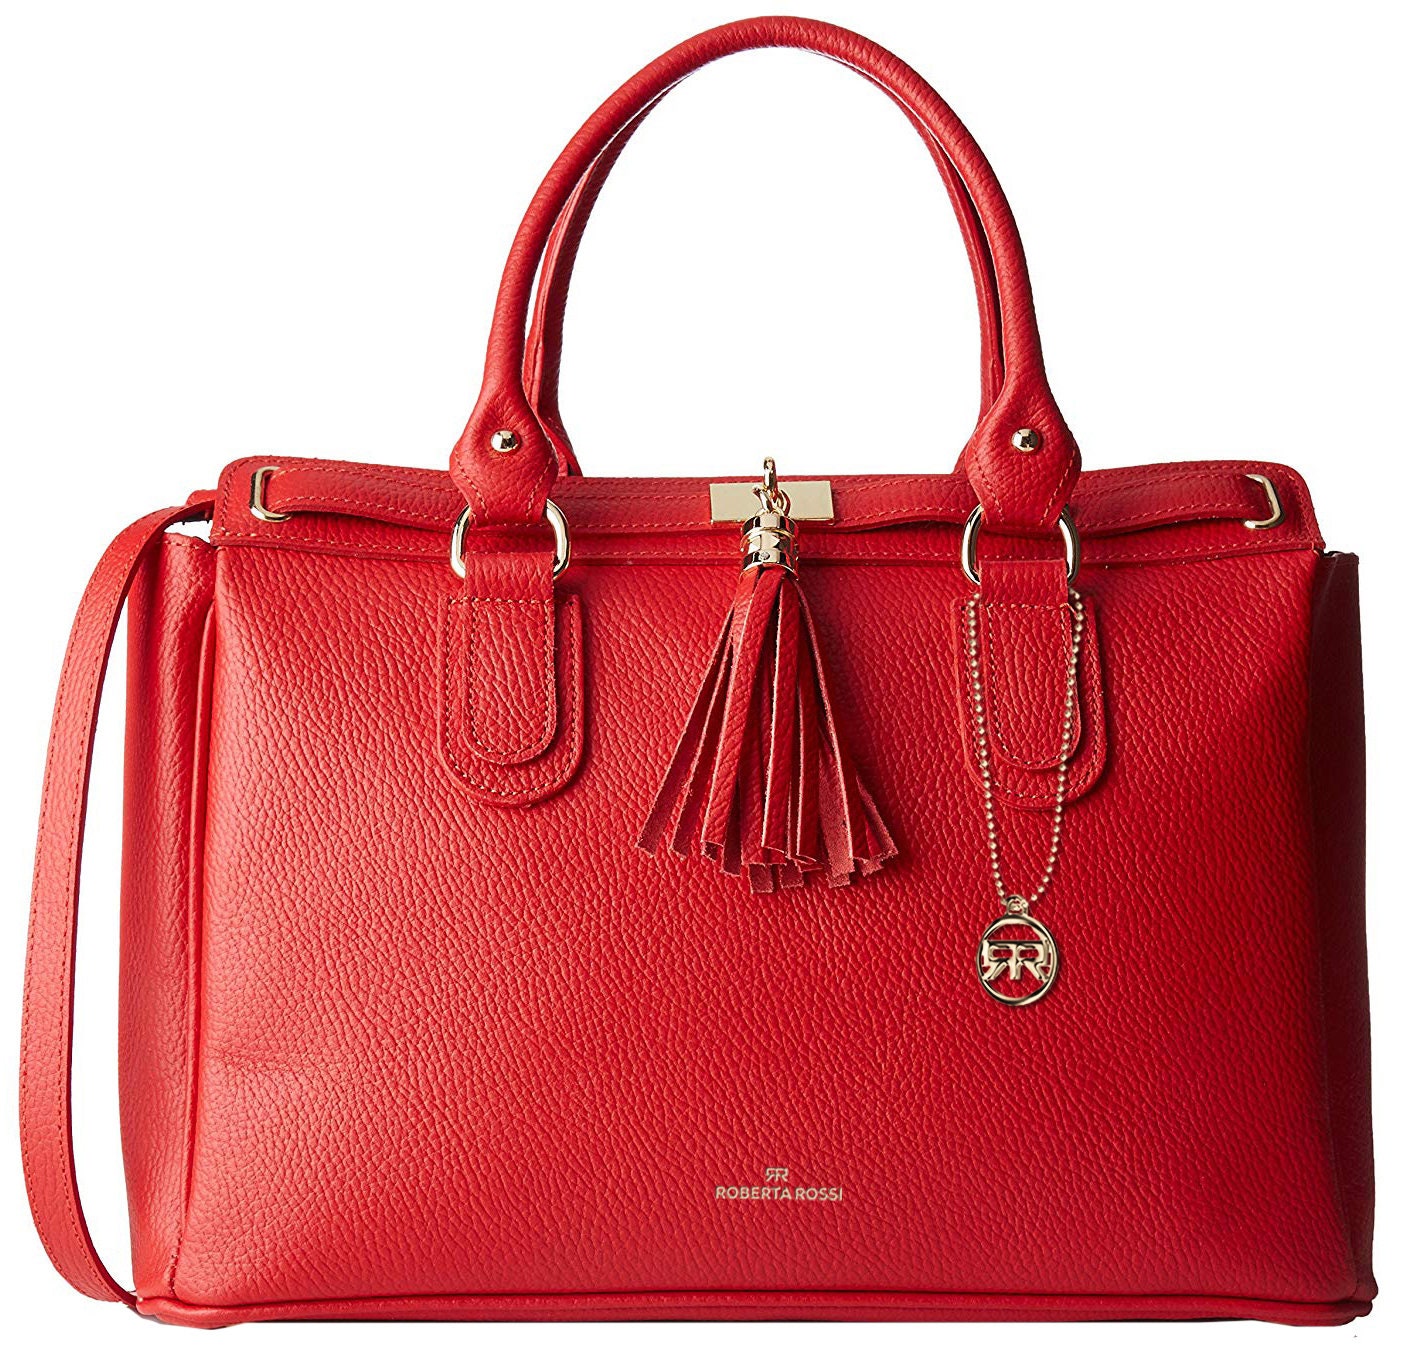 Roberta Rossi Handbag woman handcrafted artisanal fashion | Etsy